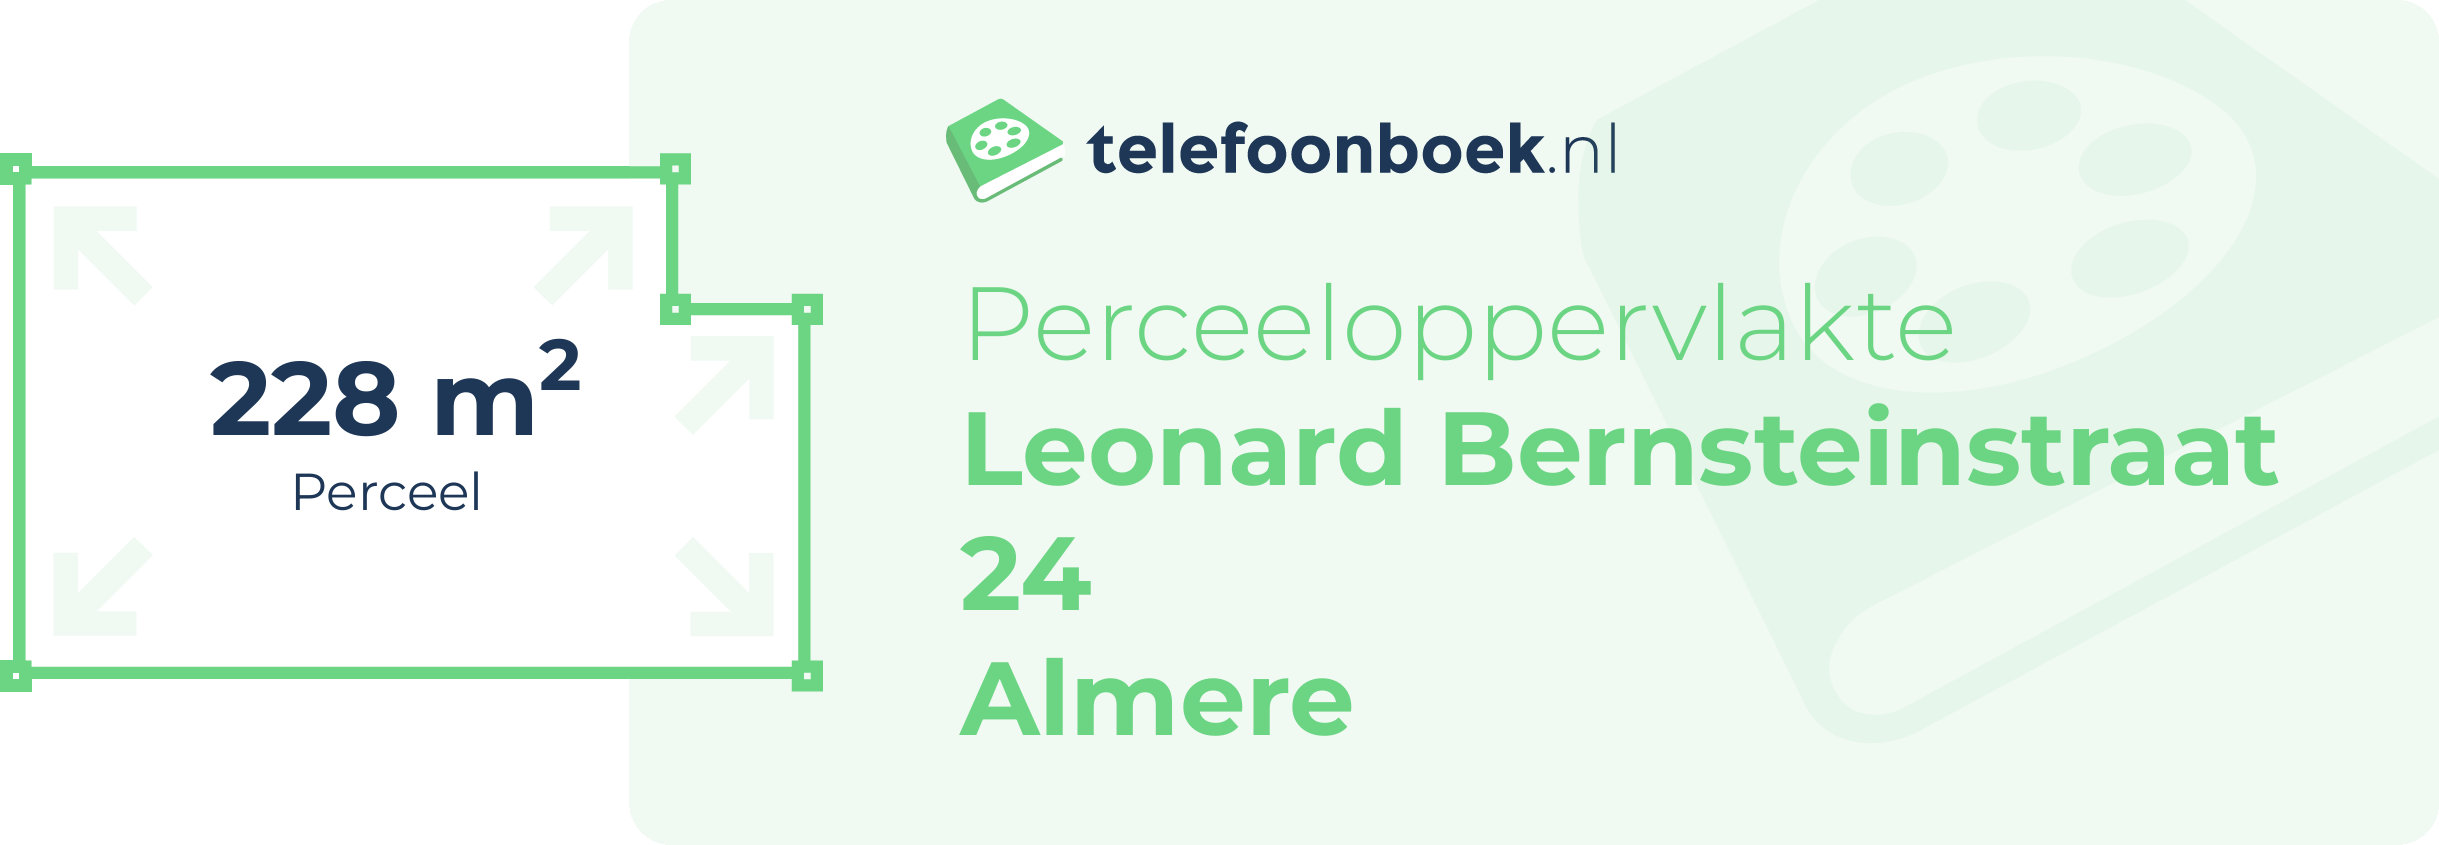 Perceeloppervlakte Leonard Bernsteinstraat 24 Almere